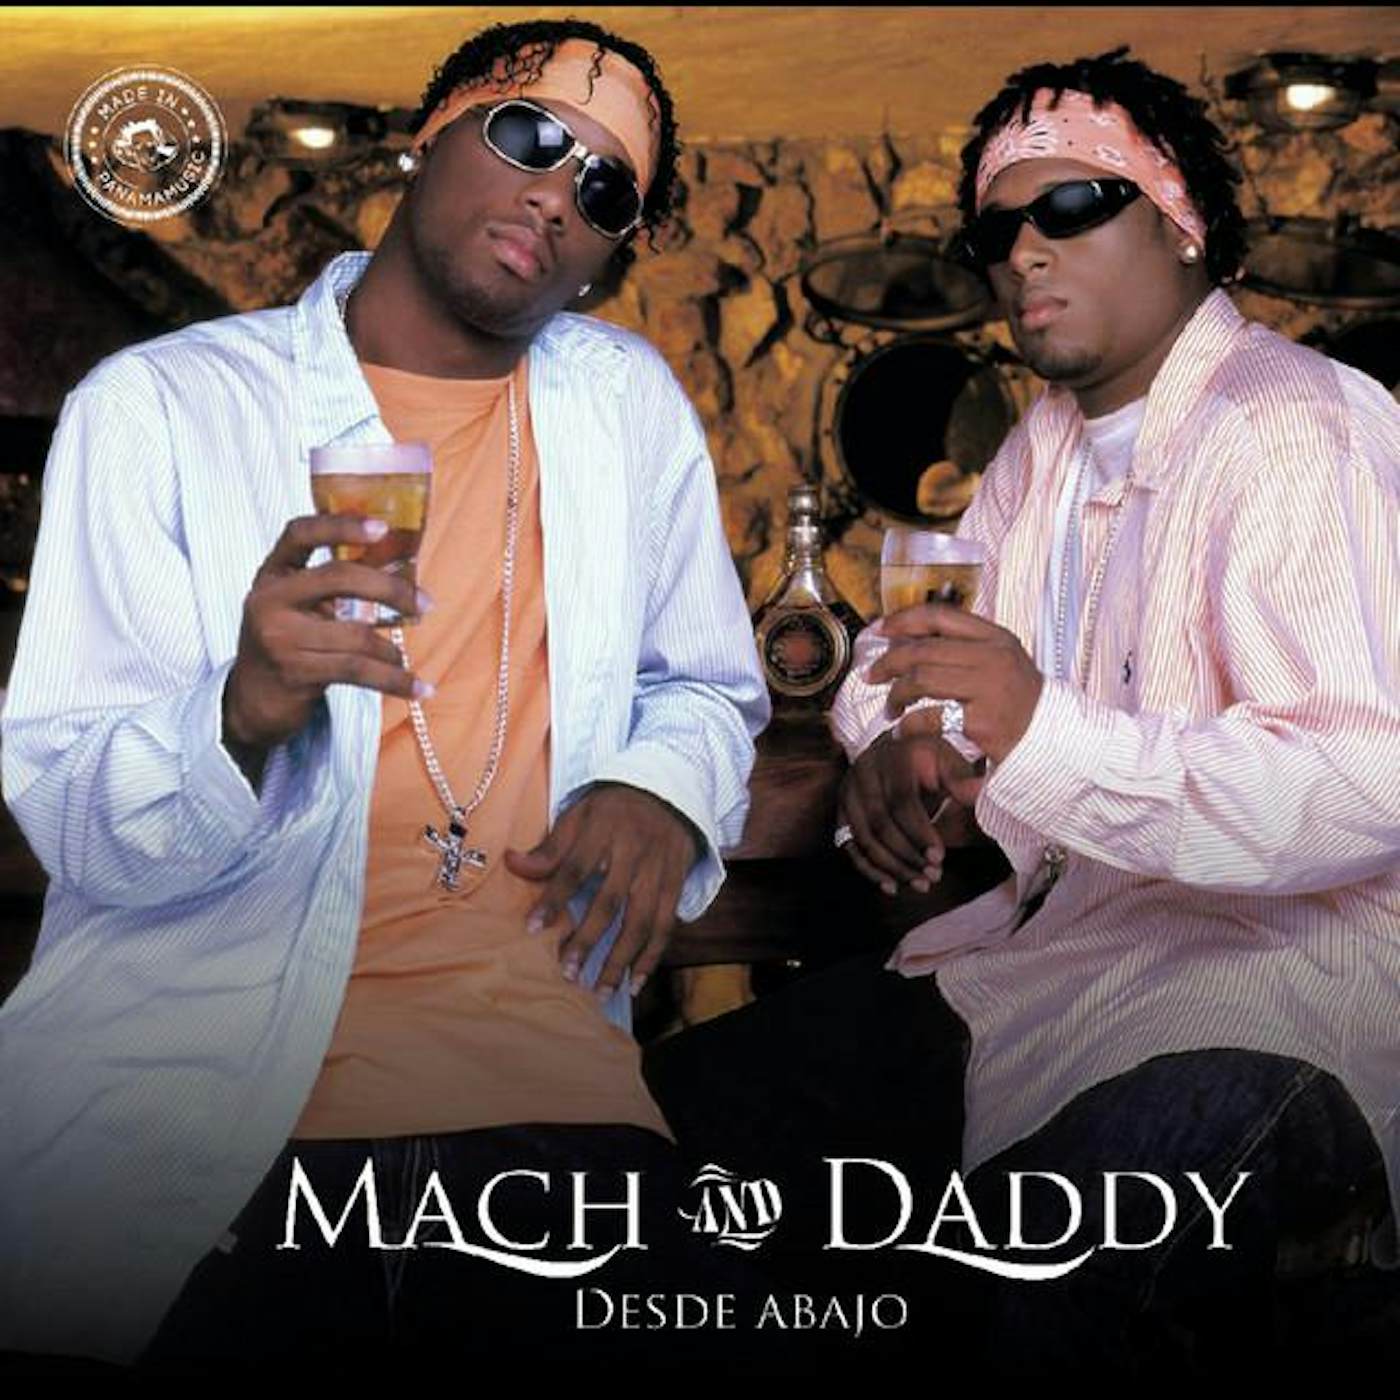 Mach & Daddy